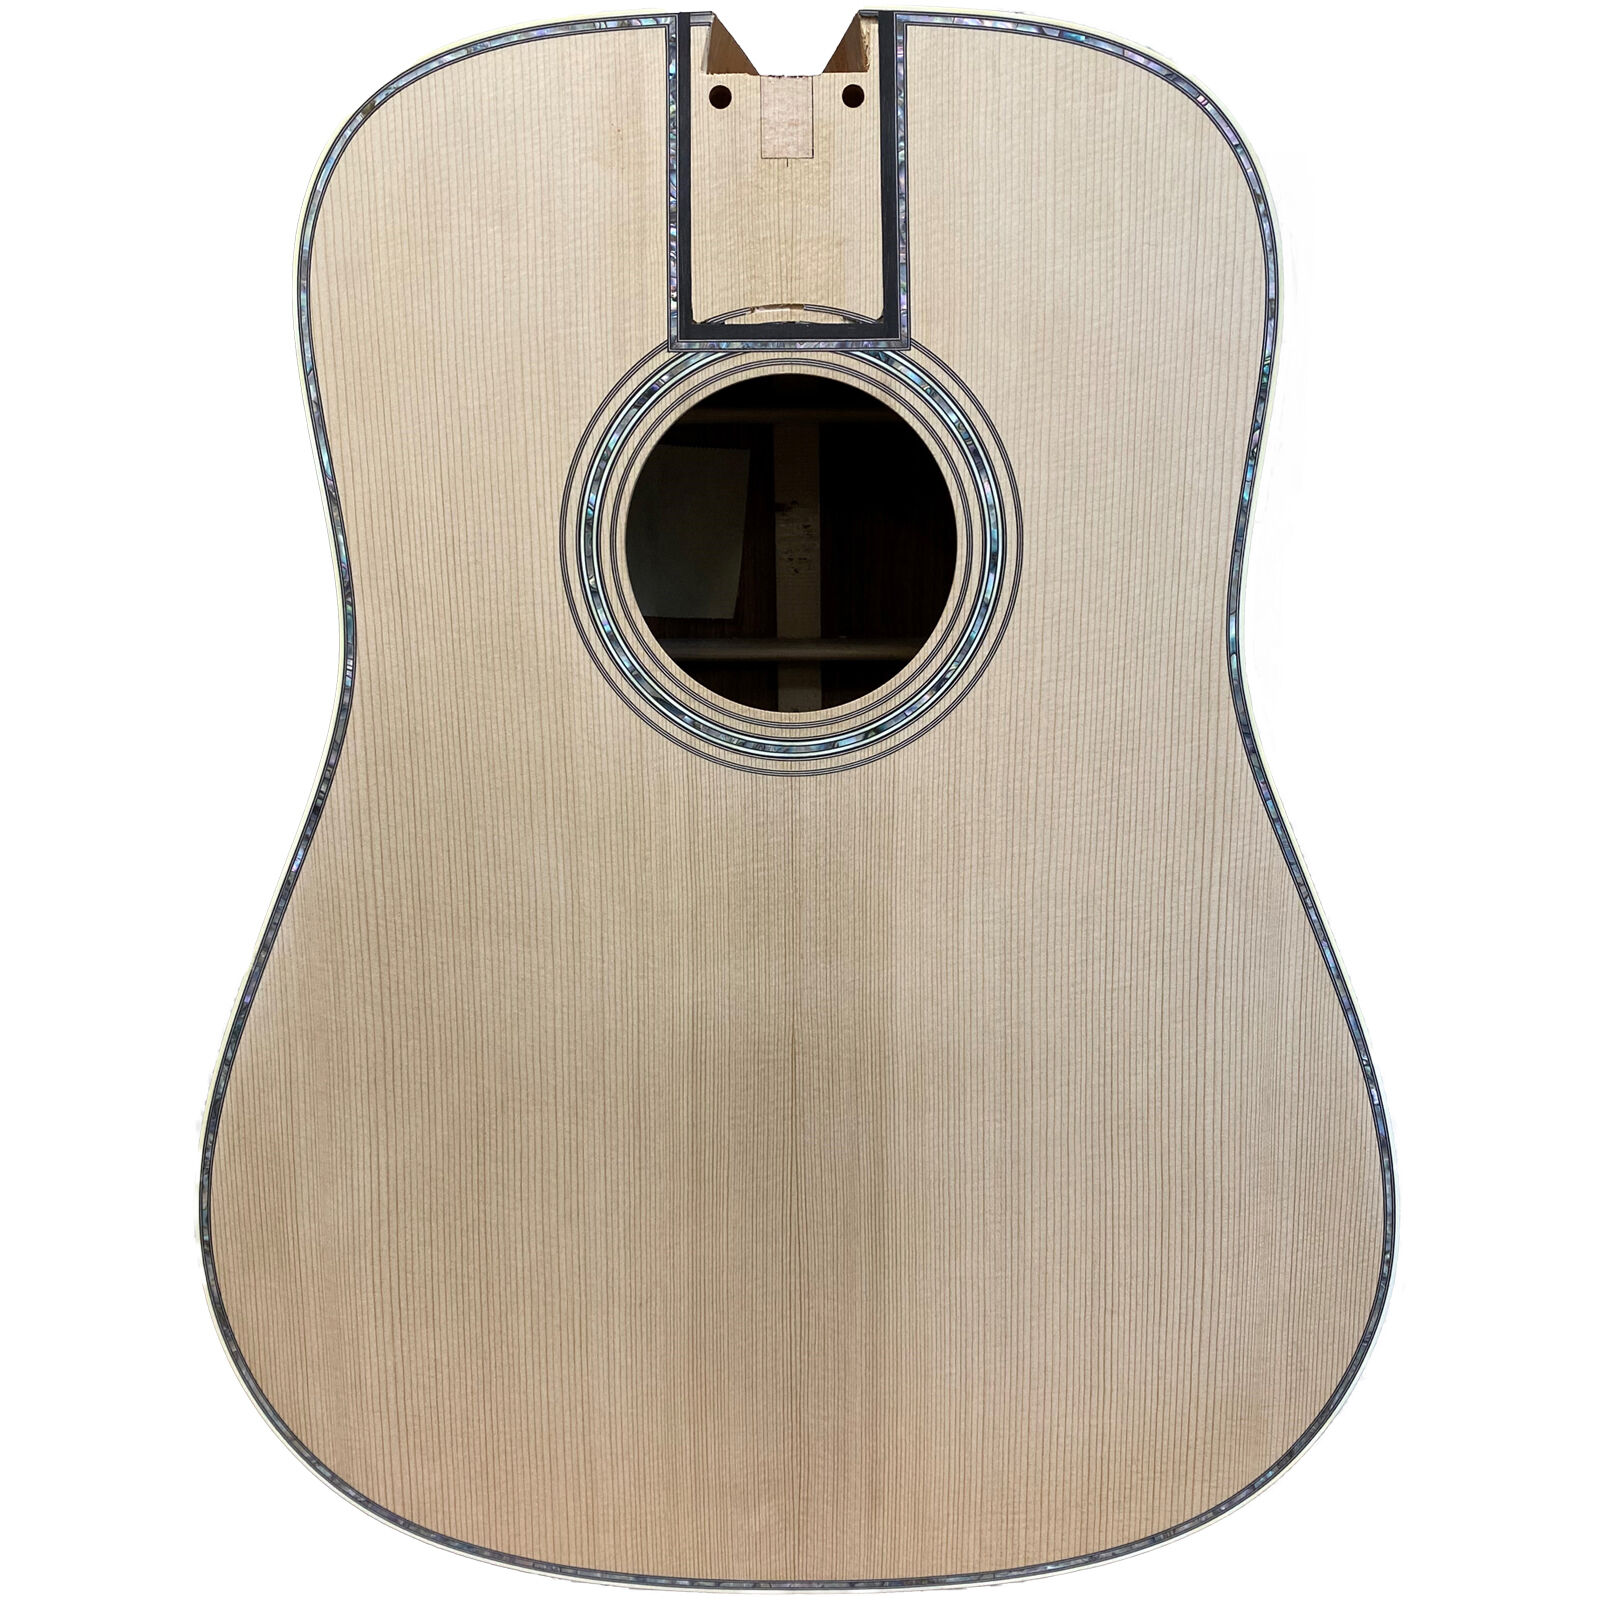 Guitar Tool Mahogany Neck Rosewood Fingerboard Spruce Body Whole Set SDENSHI Unfinished Acoustic Guitar DIY Kit 